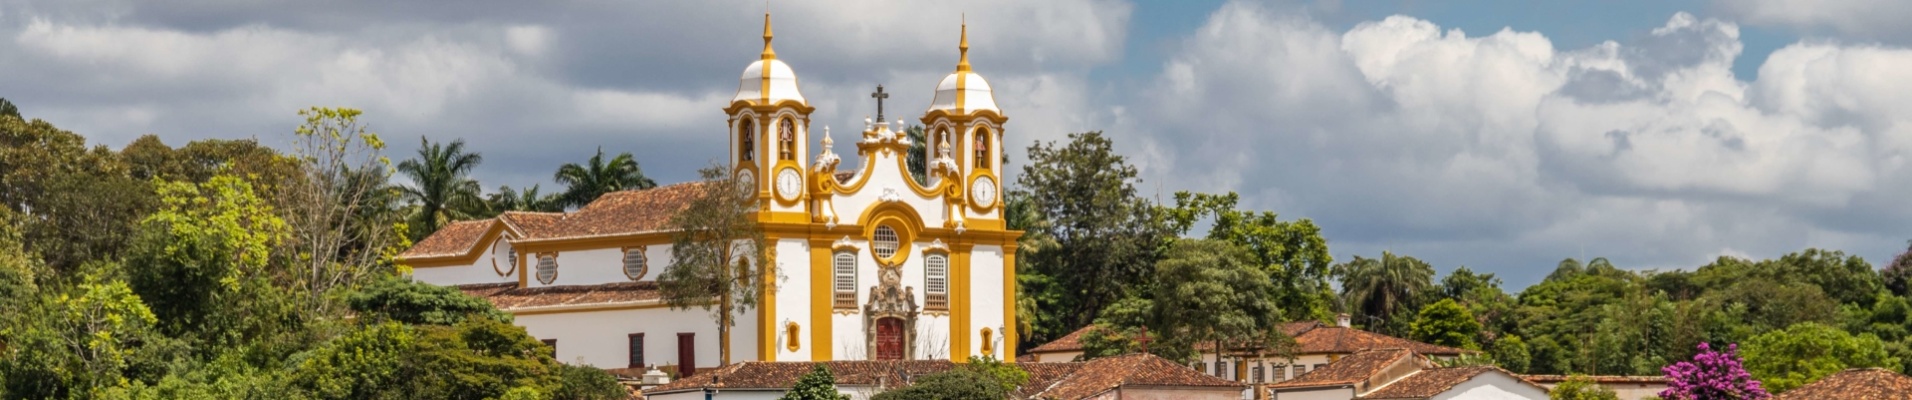 Eglise de Tirradentes dans le Minas Gerais